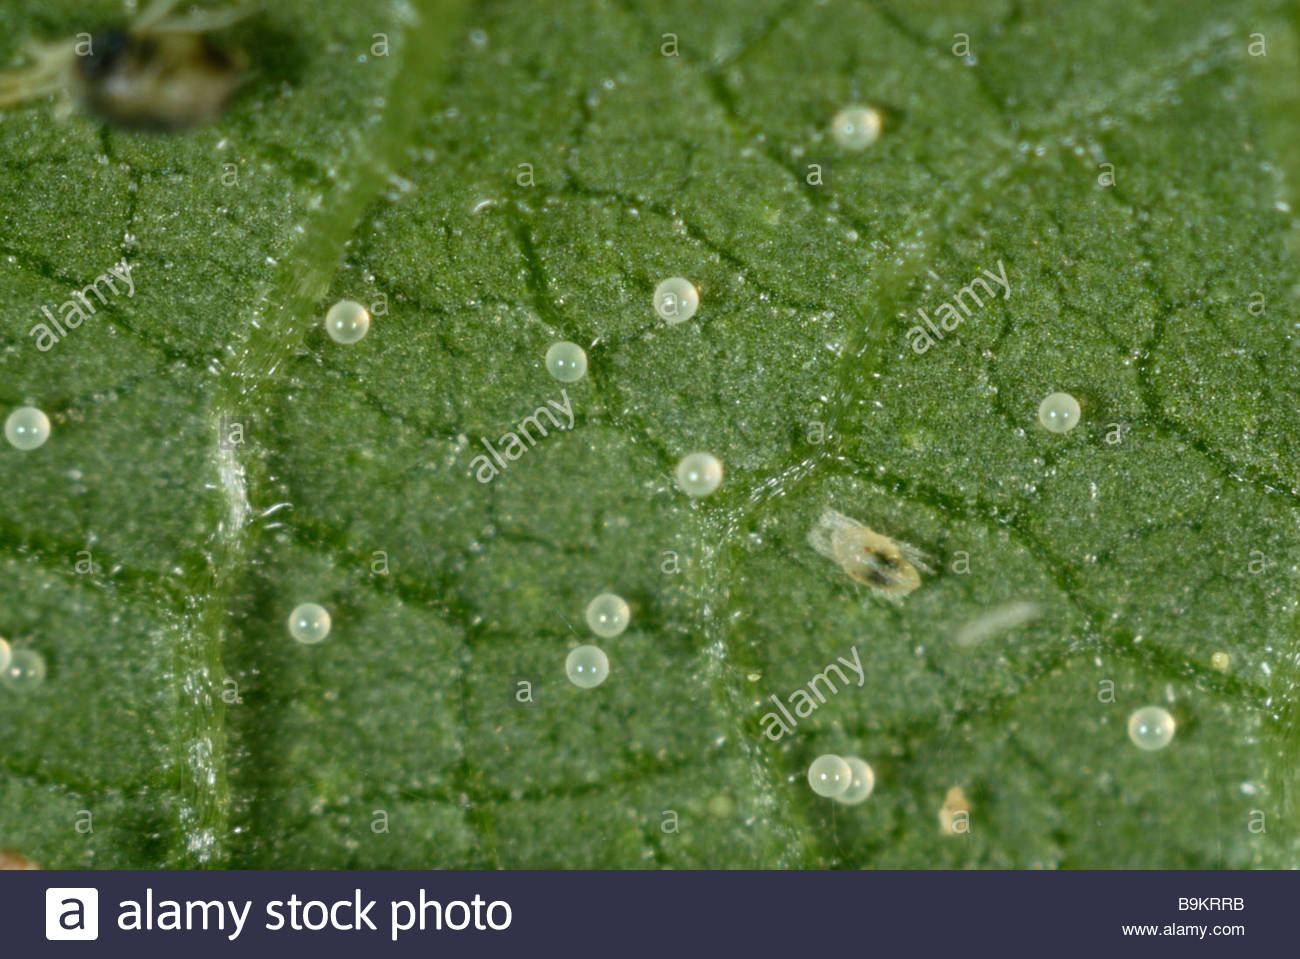 two-spotted-spider-mite-eggs-tetranychus-urticae-on-a-plant-leaf-surface-B9KRRB.jpg